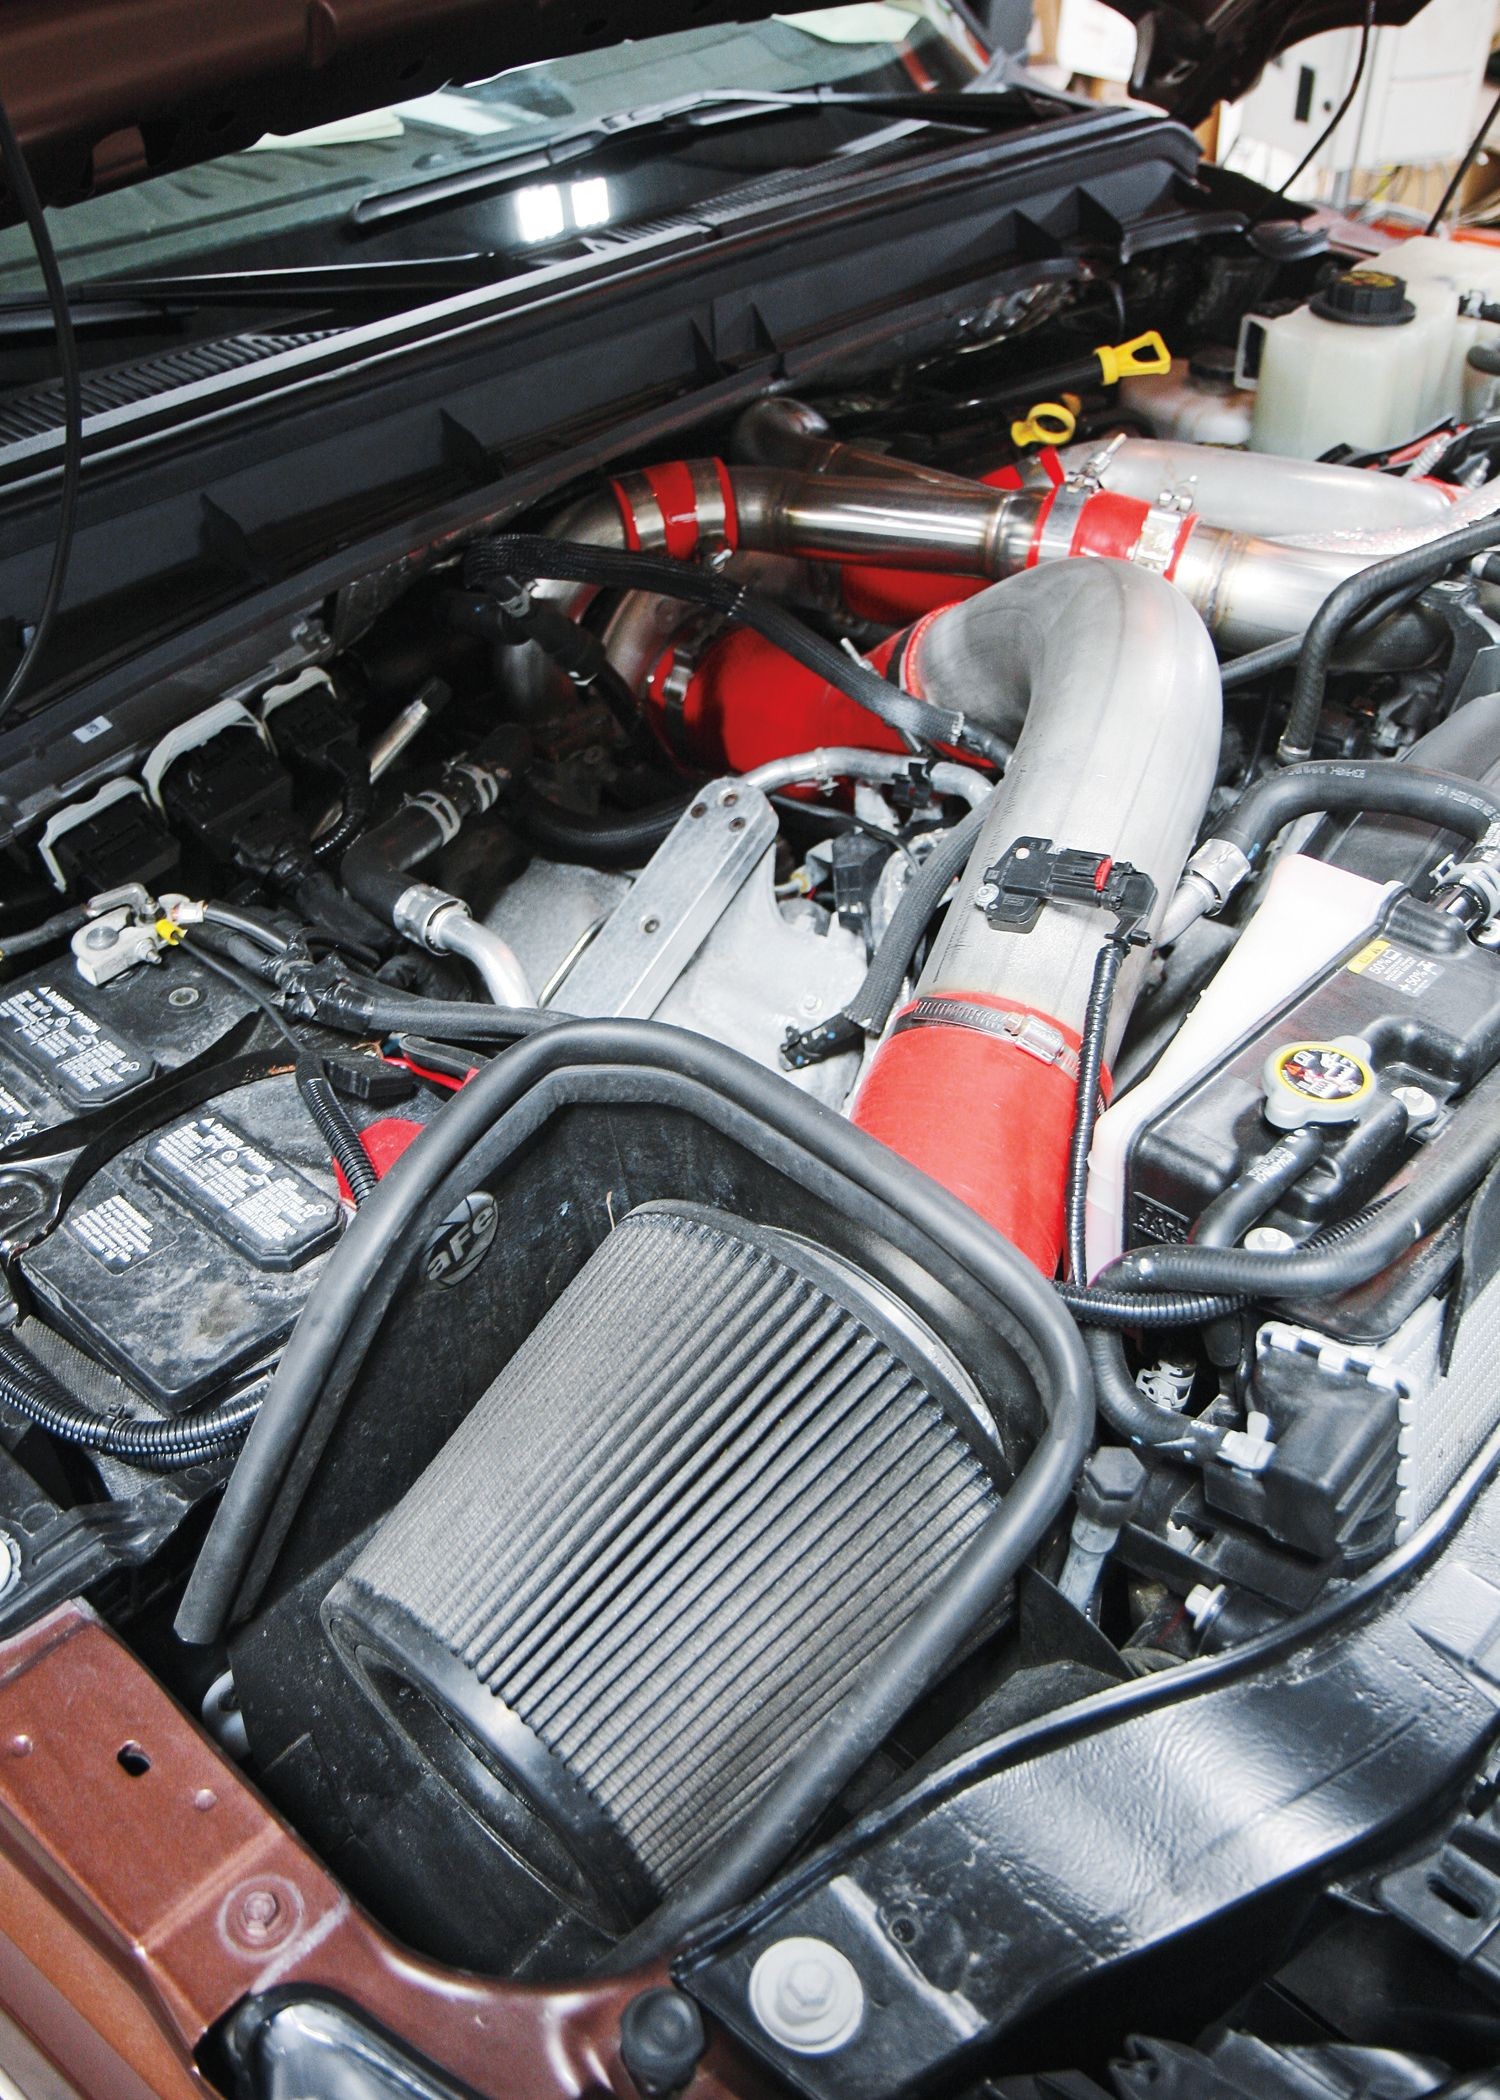 6 7 Powerstroke Engine Diagram 70hp Midwest Diesel Turbo Upgrade for 2011 2014 ford 6 7l Power Stroke Of 6 7 Powerstroke Engine Diagram